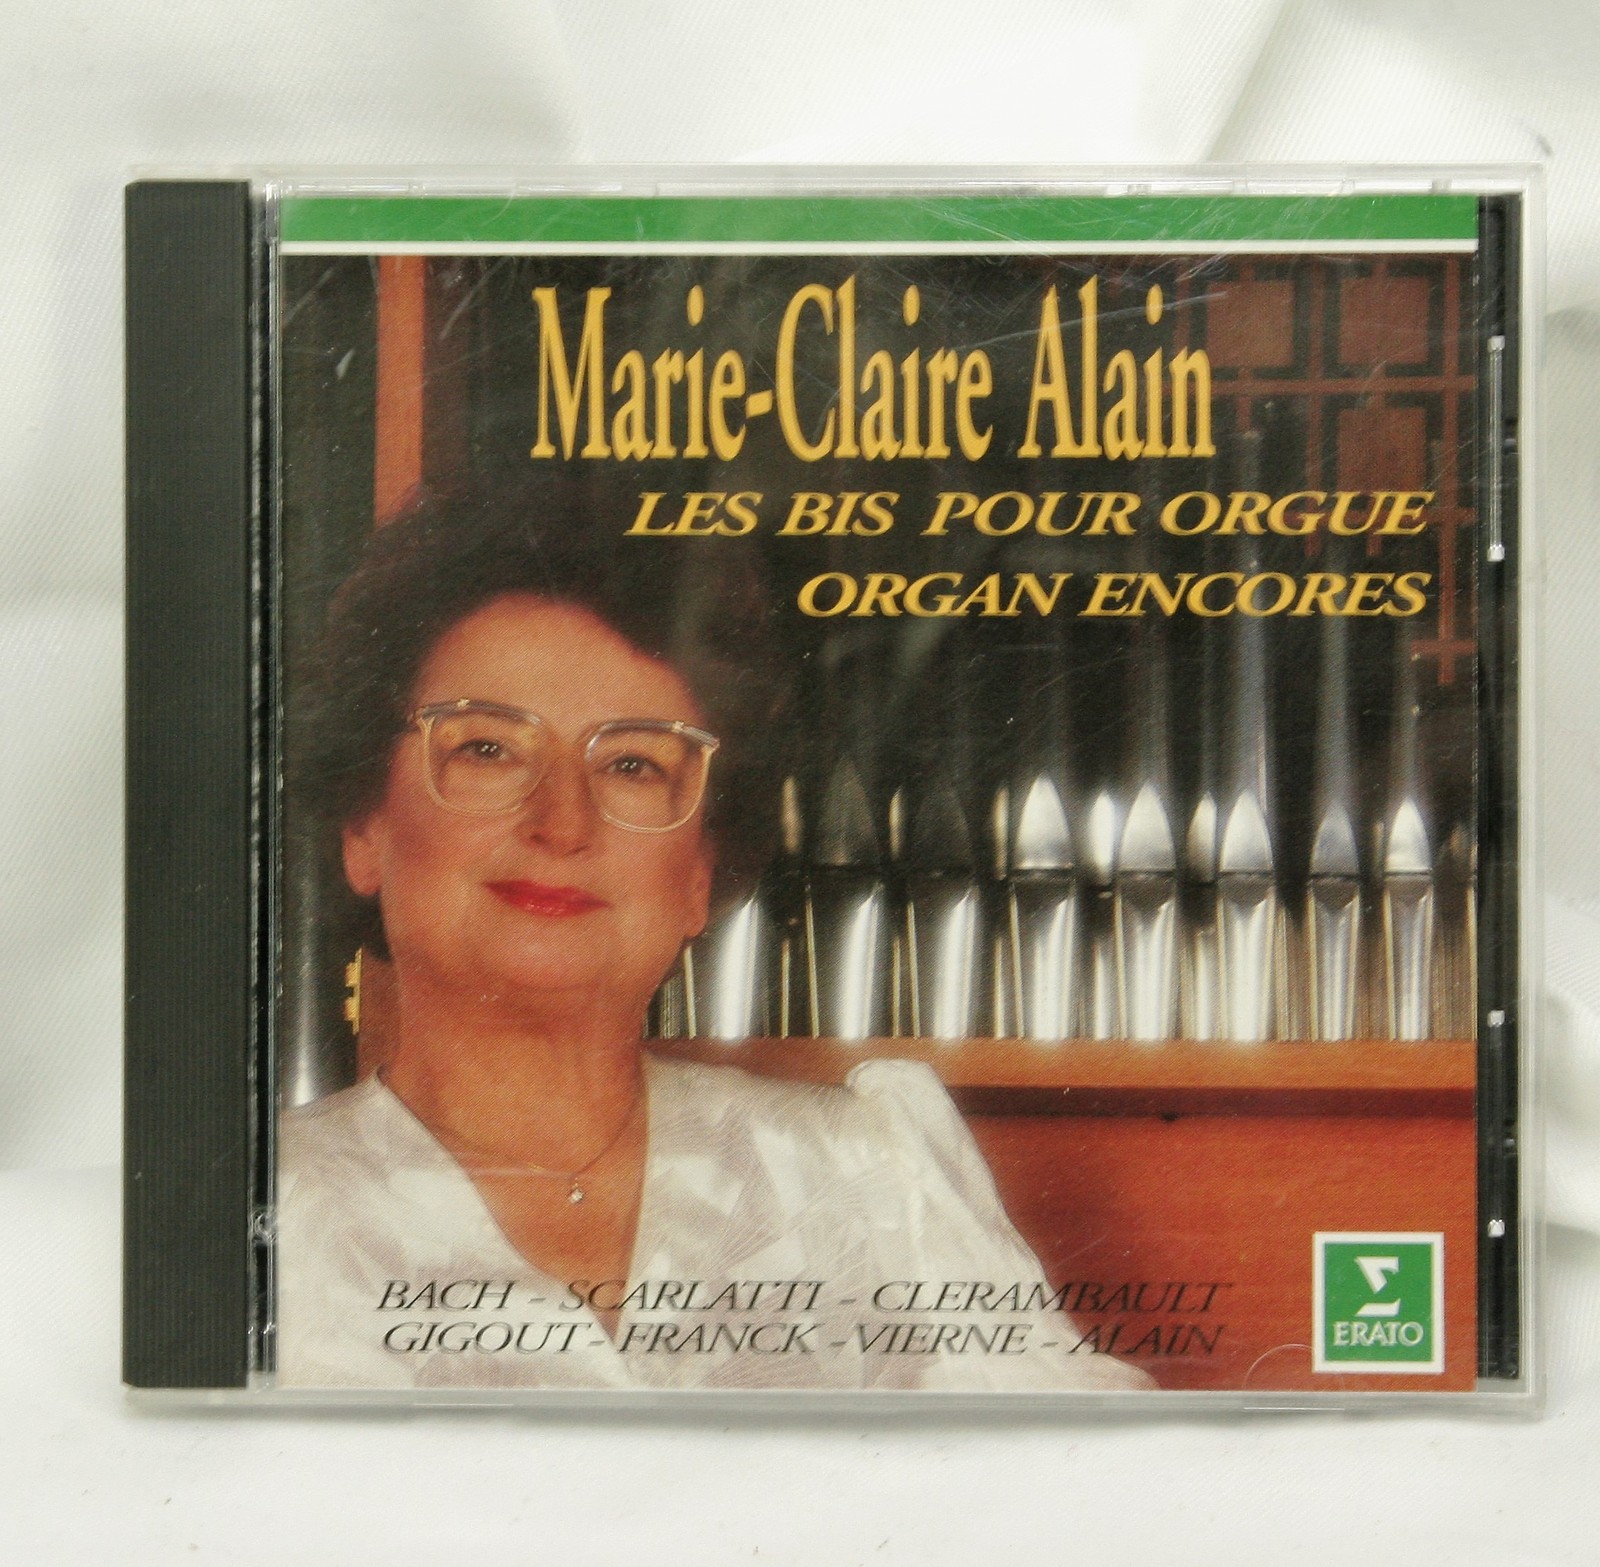 CD: MARIE-CLAIRE ALAIN Les Bis pour Orgue Organ Encores BACH SCARLATTI  GIGOUT